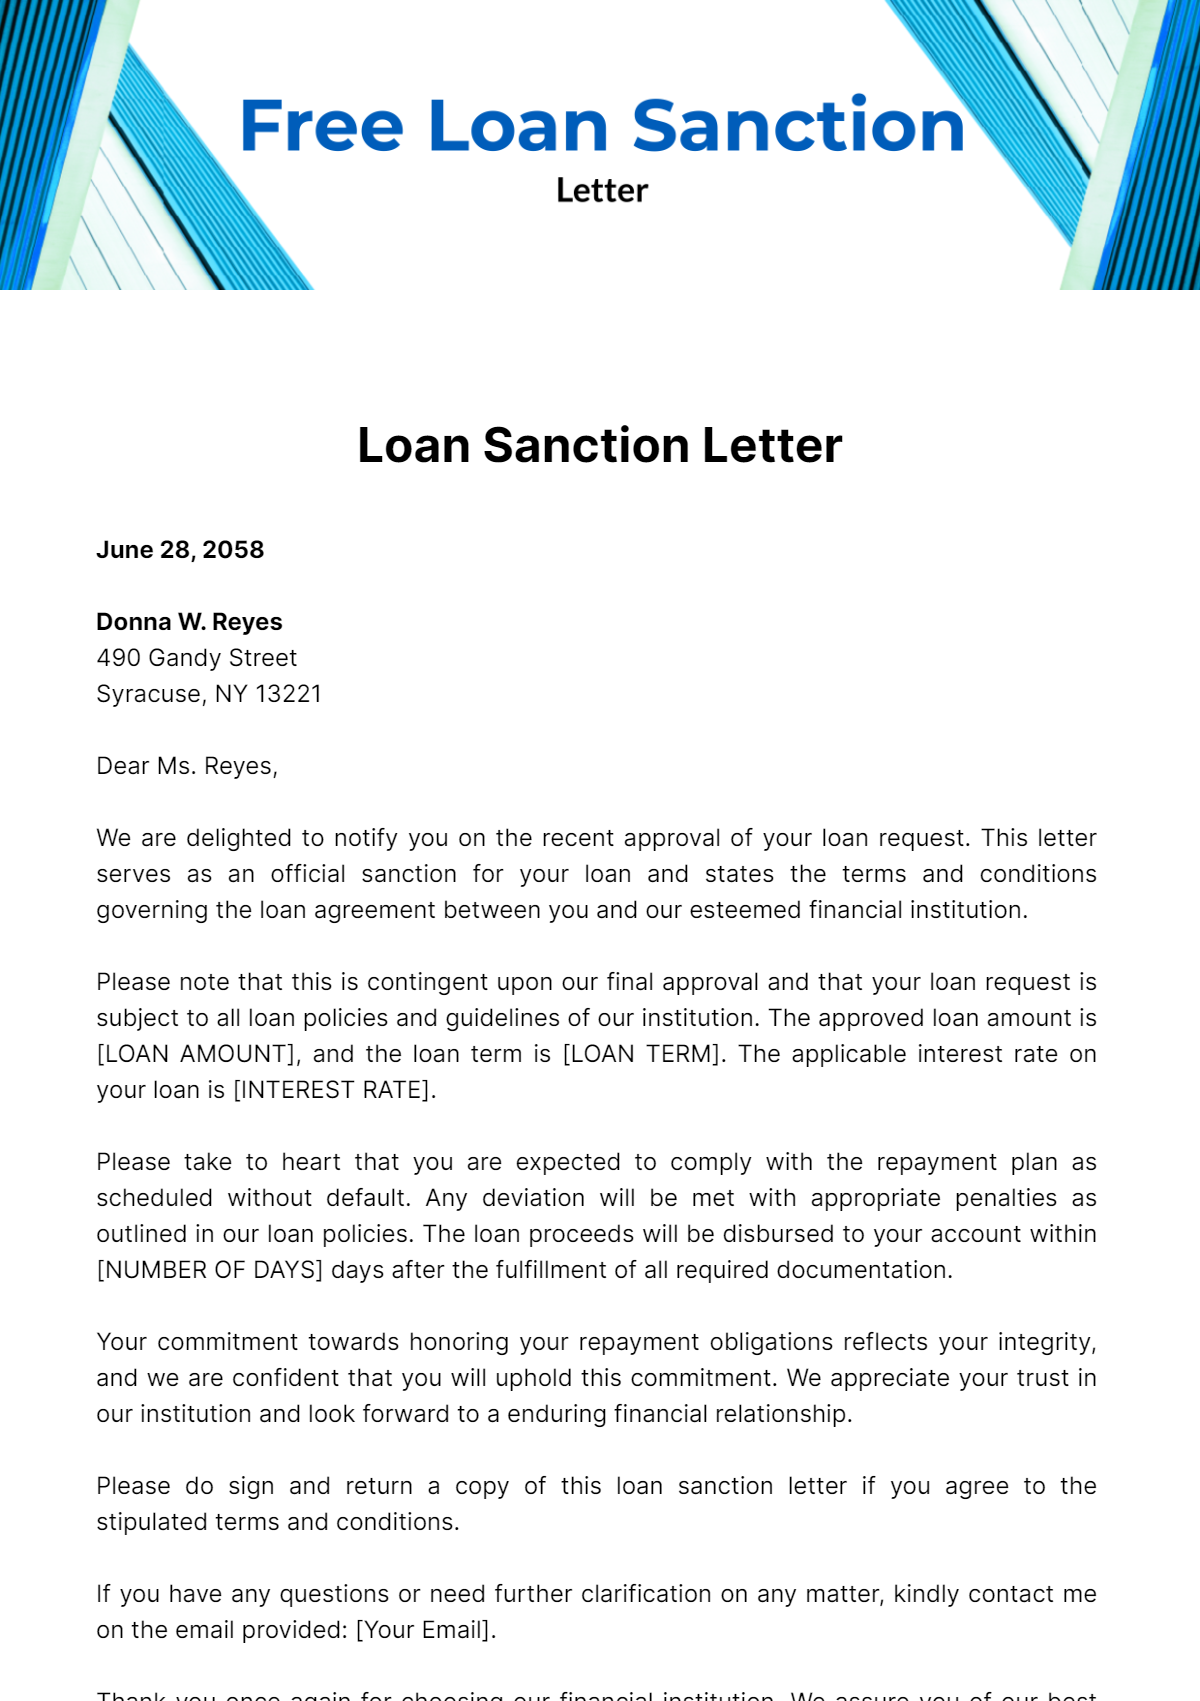 Free Loan Sanction Letter Template